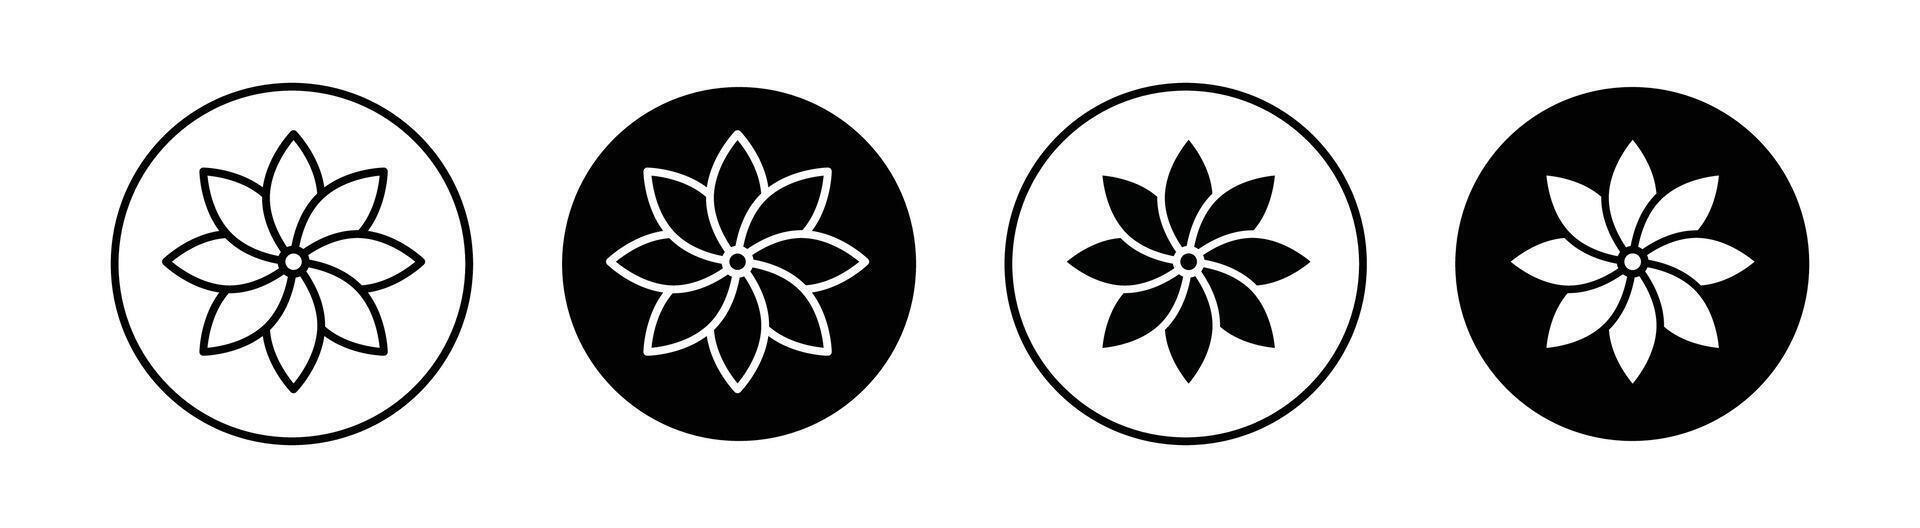 Flowers vector icon